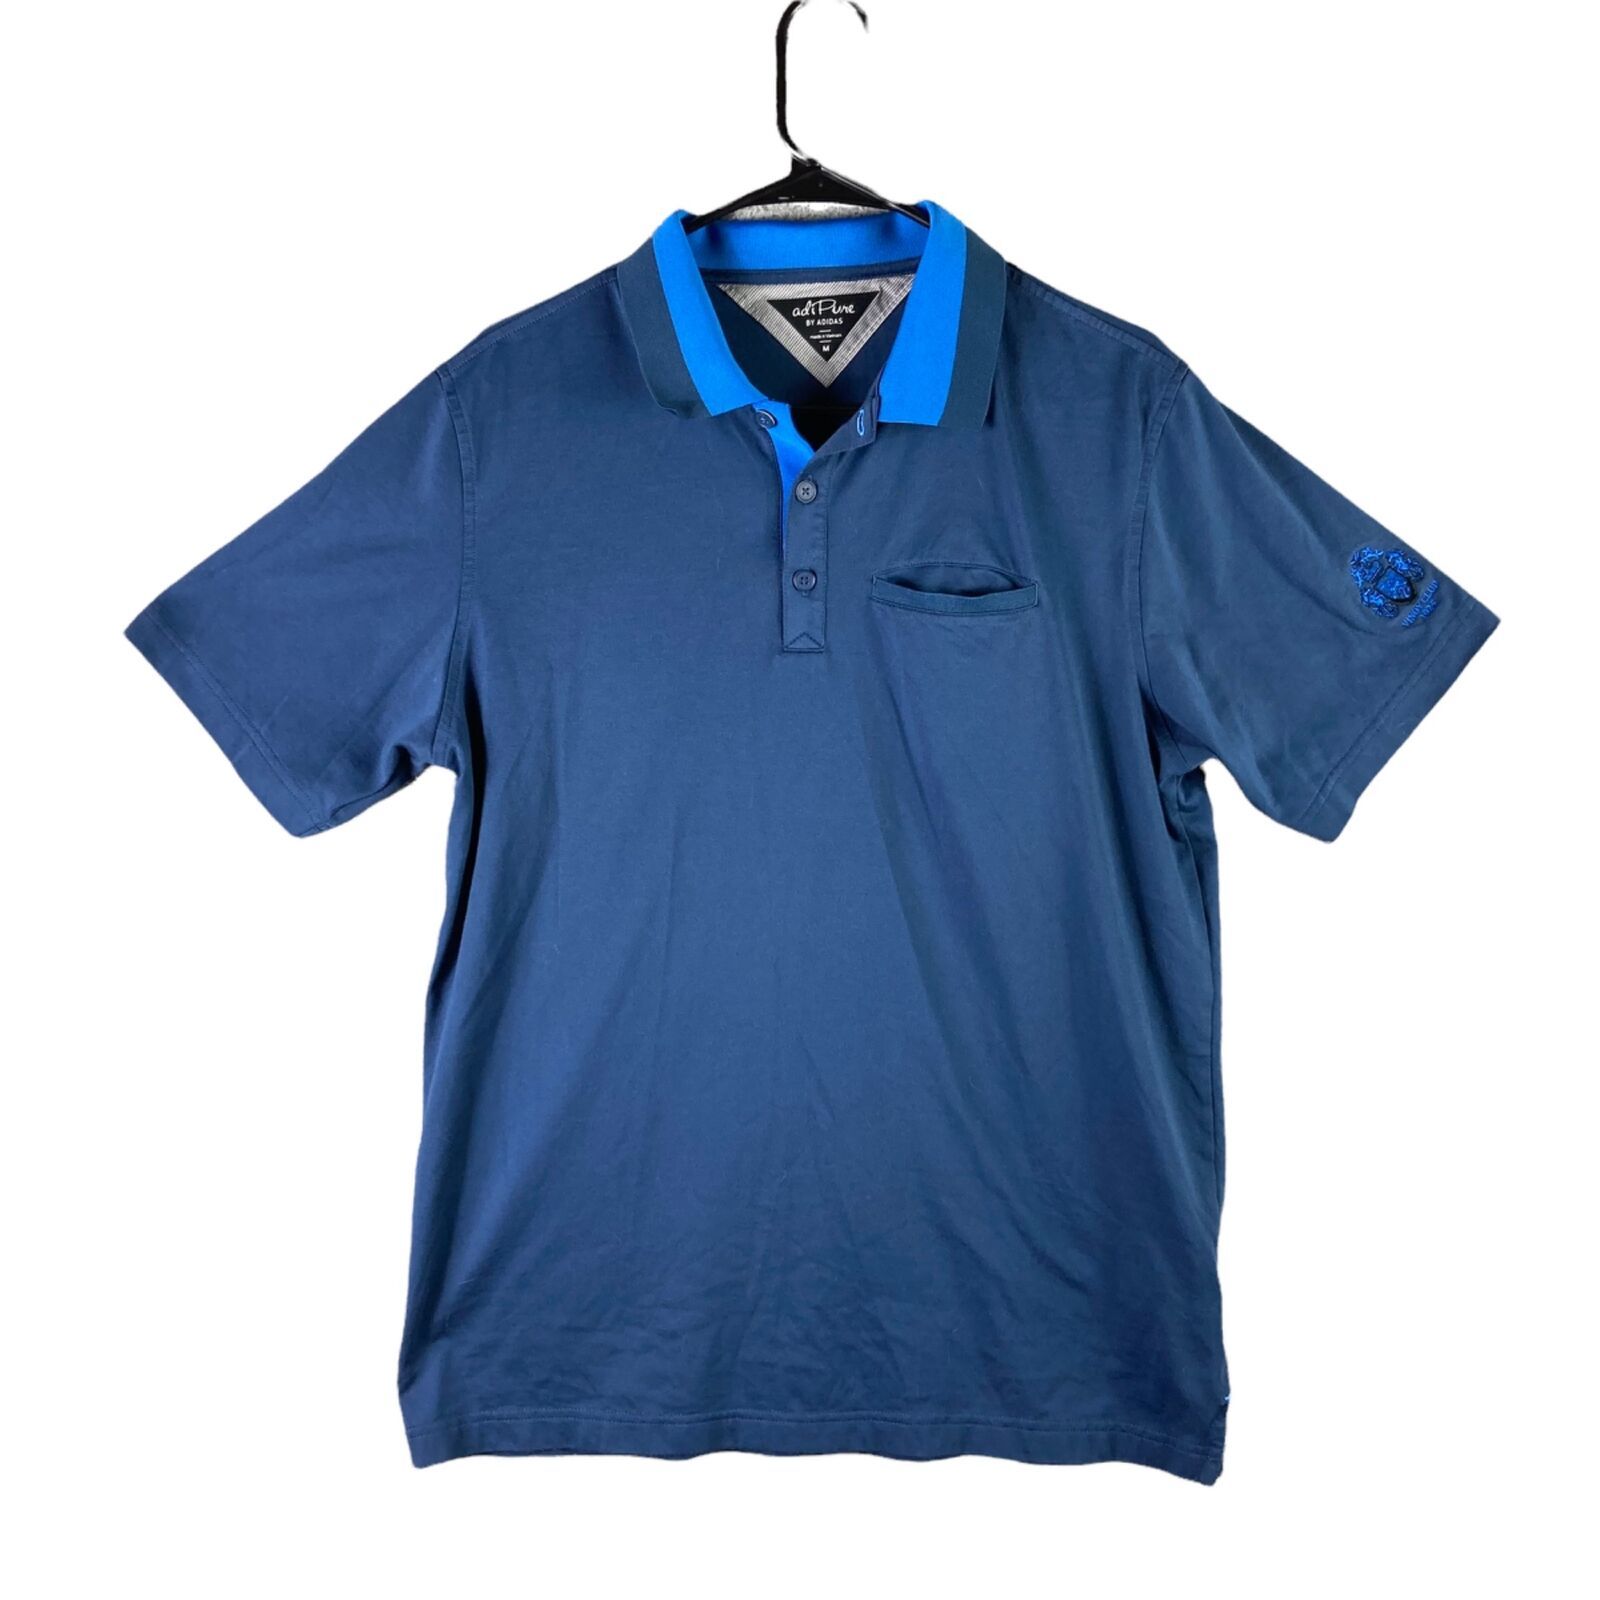 Primary image for Adidas Polo Shirt Golf Short Sleeve Mens Adipure Size Medium Blue Adi Pure